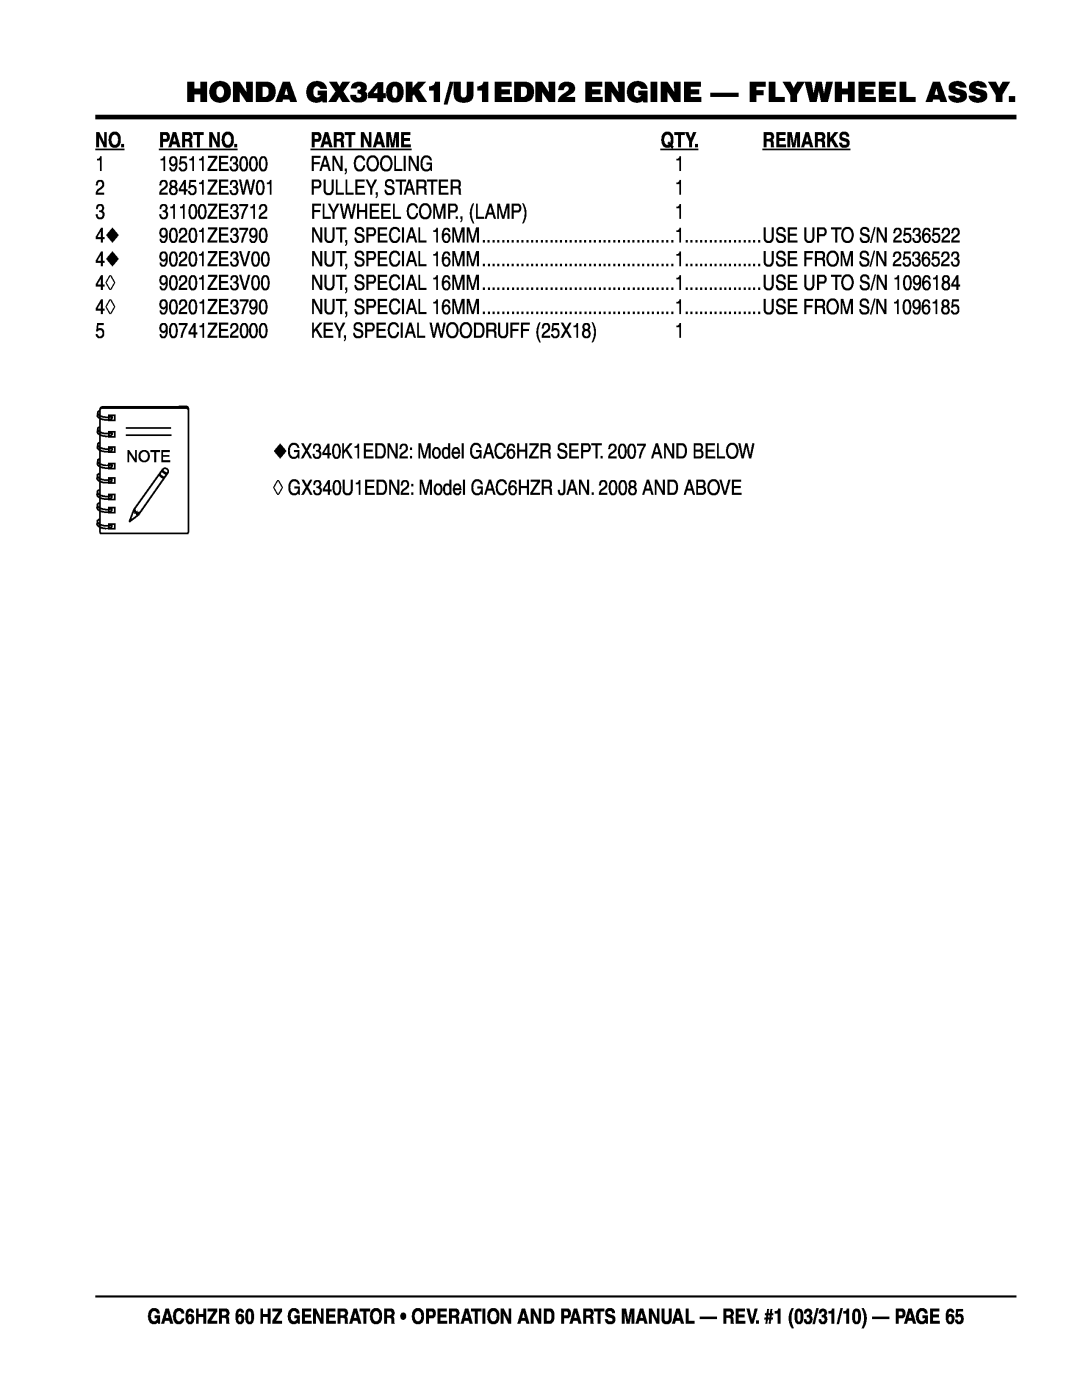 Multiquip GAC-6HZR manual HONDA GX340K1/U1EDN2 ENGINE - FLYWHEEL ASSY, Part Name, Remarks, Key, Special Woodruff 